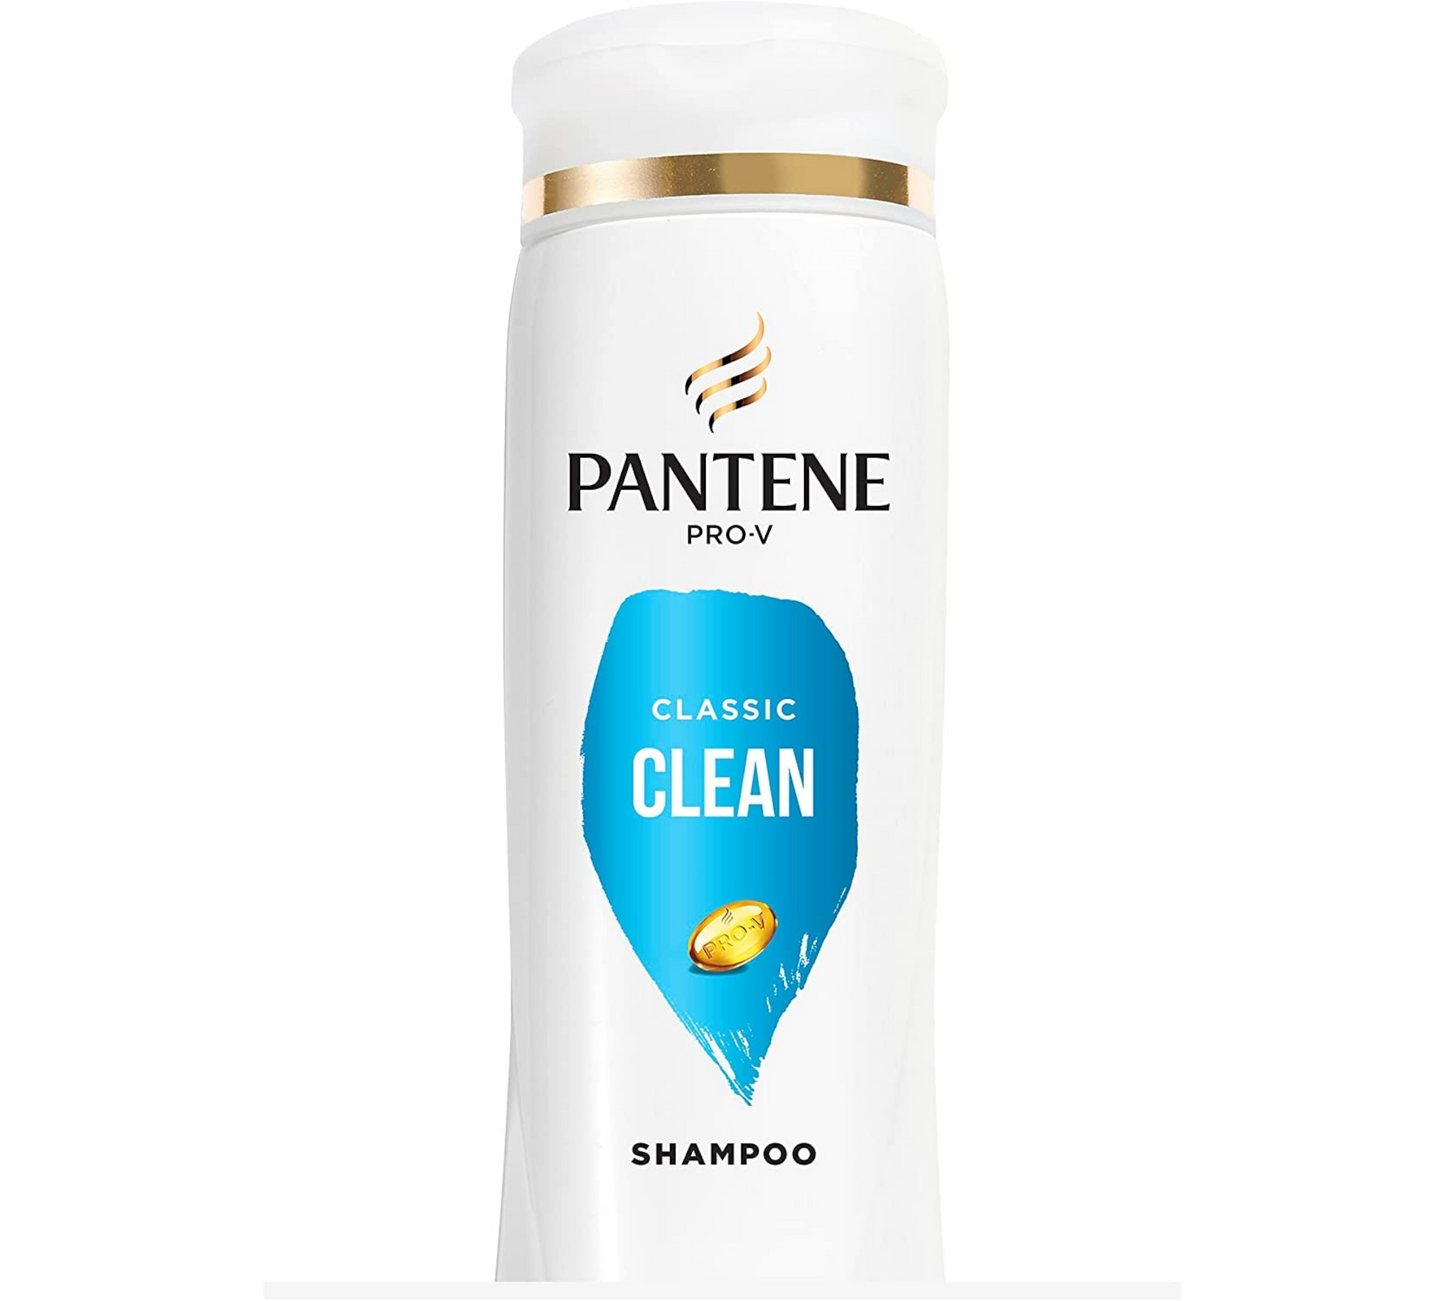 Pantene Cupid Beauty Supplies 12 Fl.Oz Shampoo Pantene Pro-V Classic Clean Shampoo